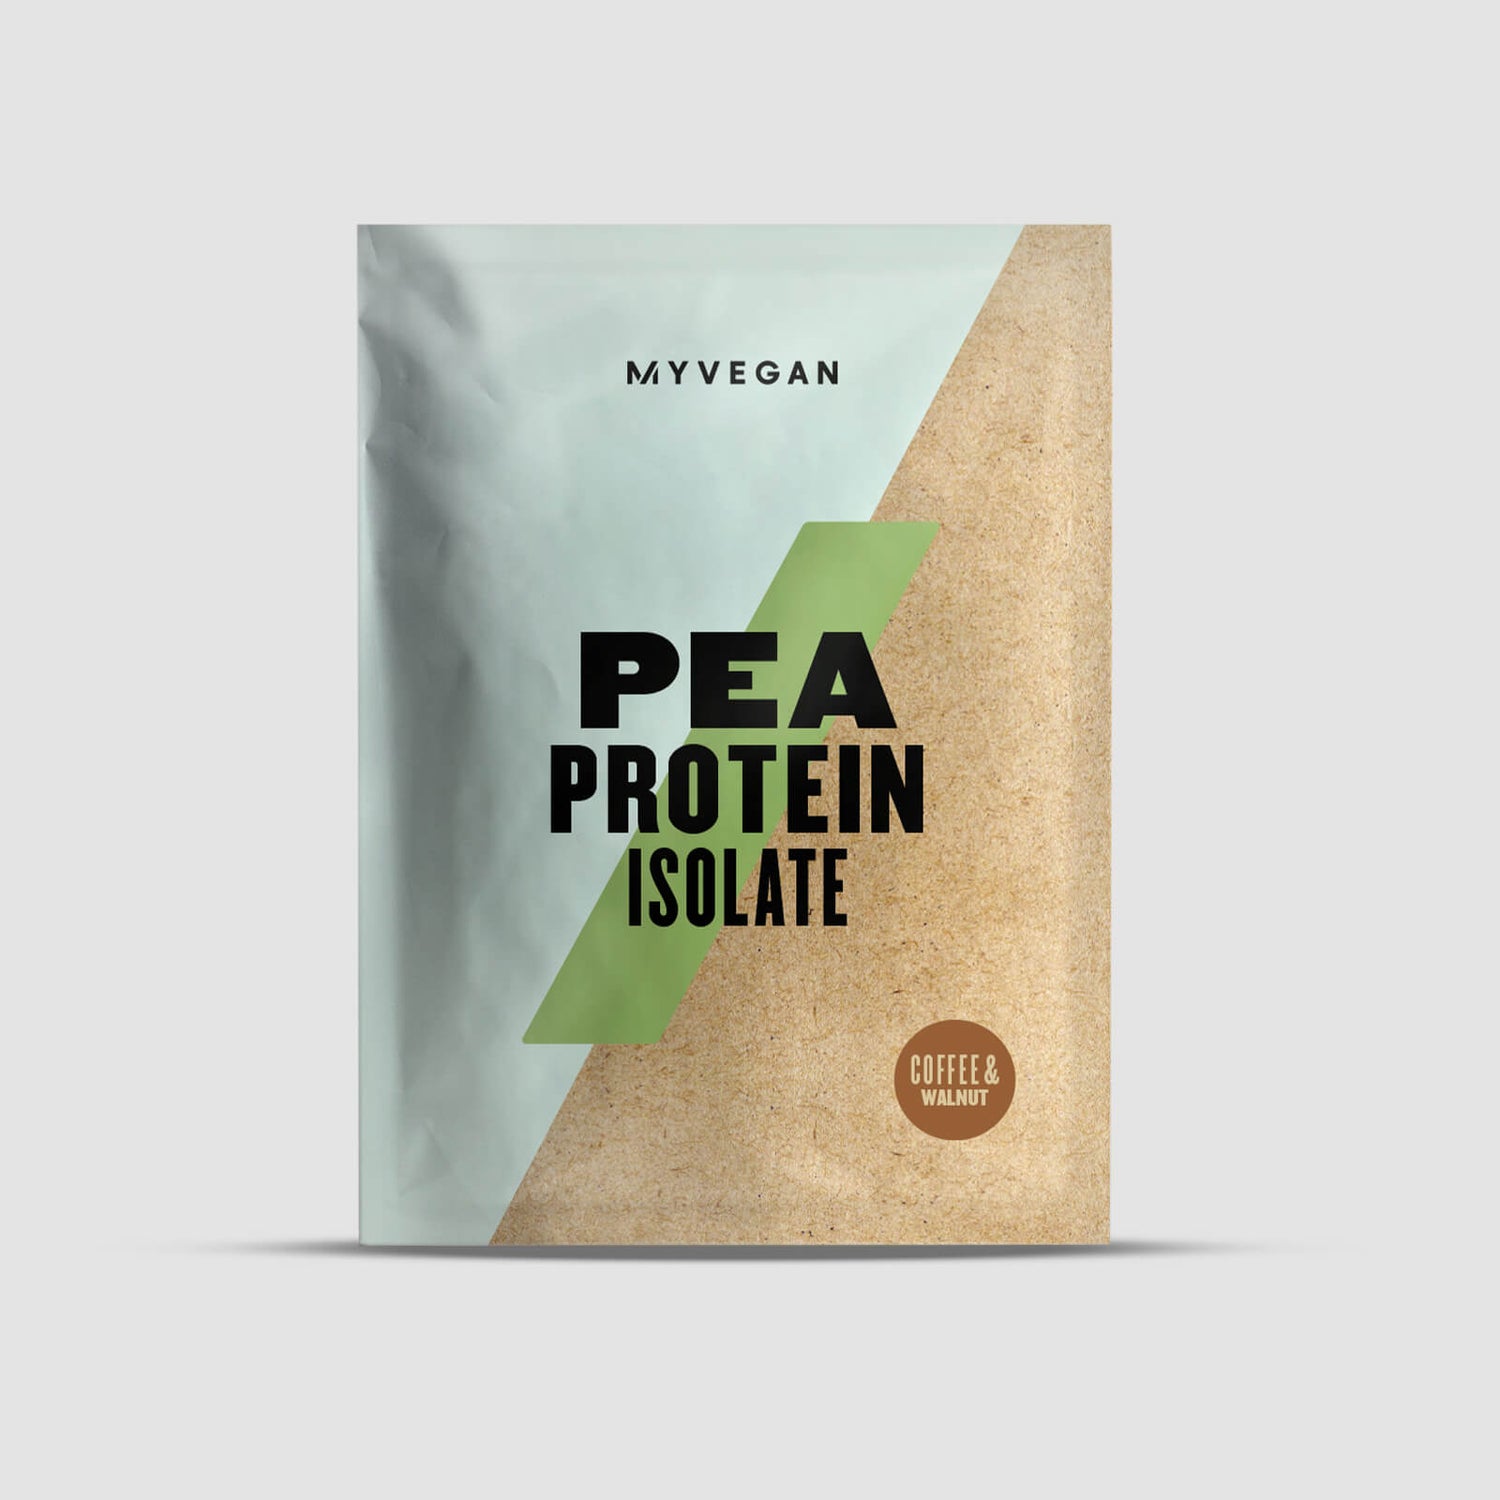 Myvegan Pea Protein Isolate (Sample) - 30g - Coffee & Walnut